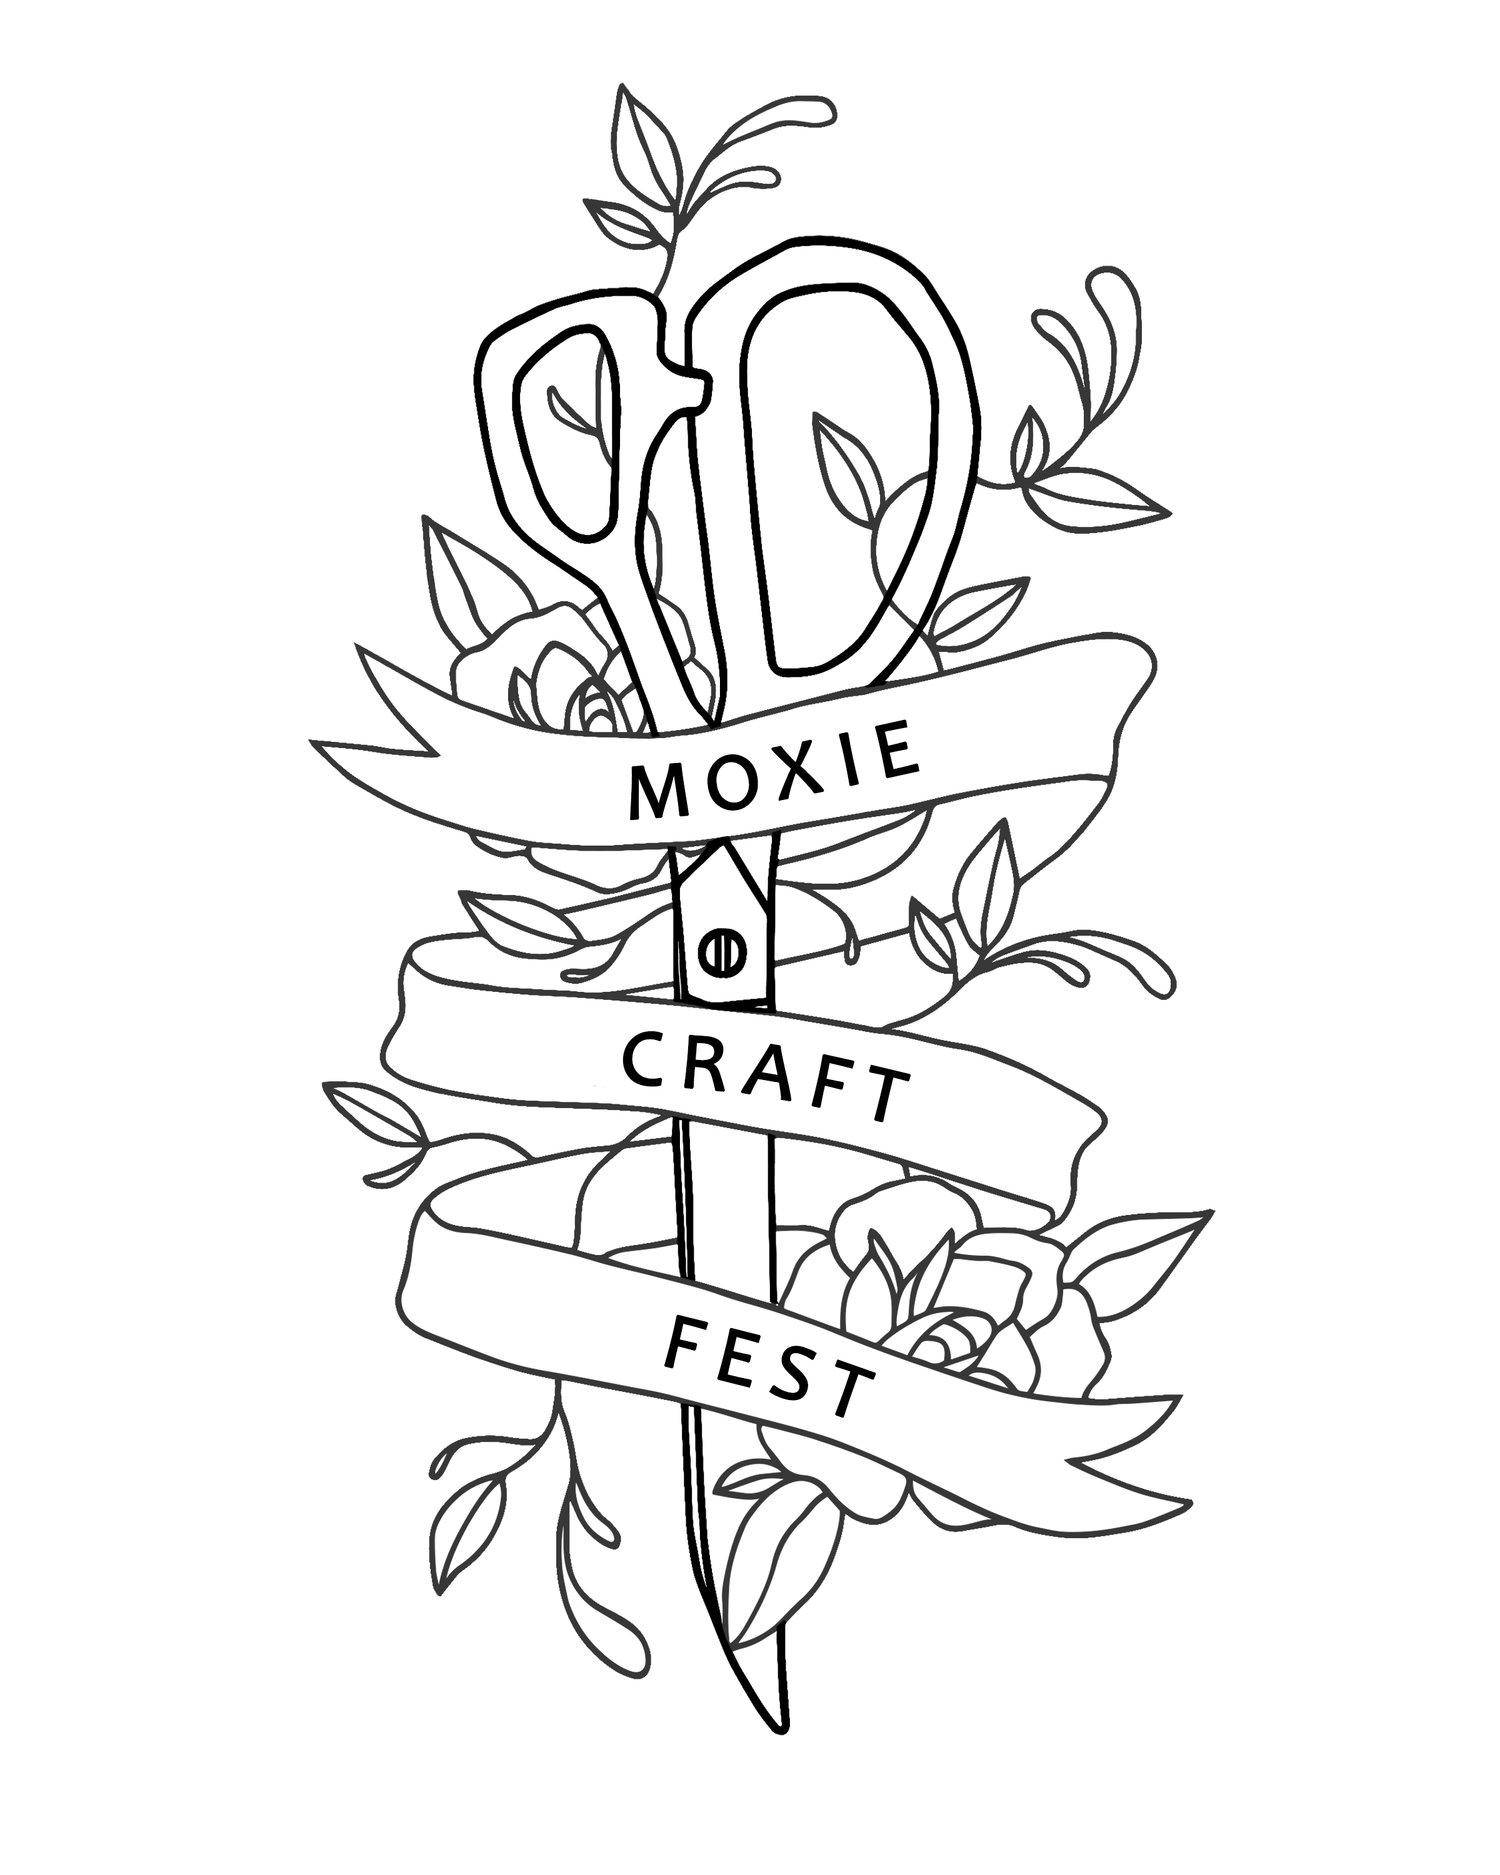 2018 Moxie Craft Fest